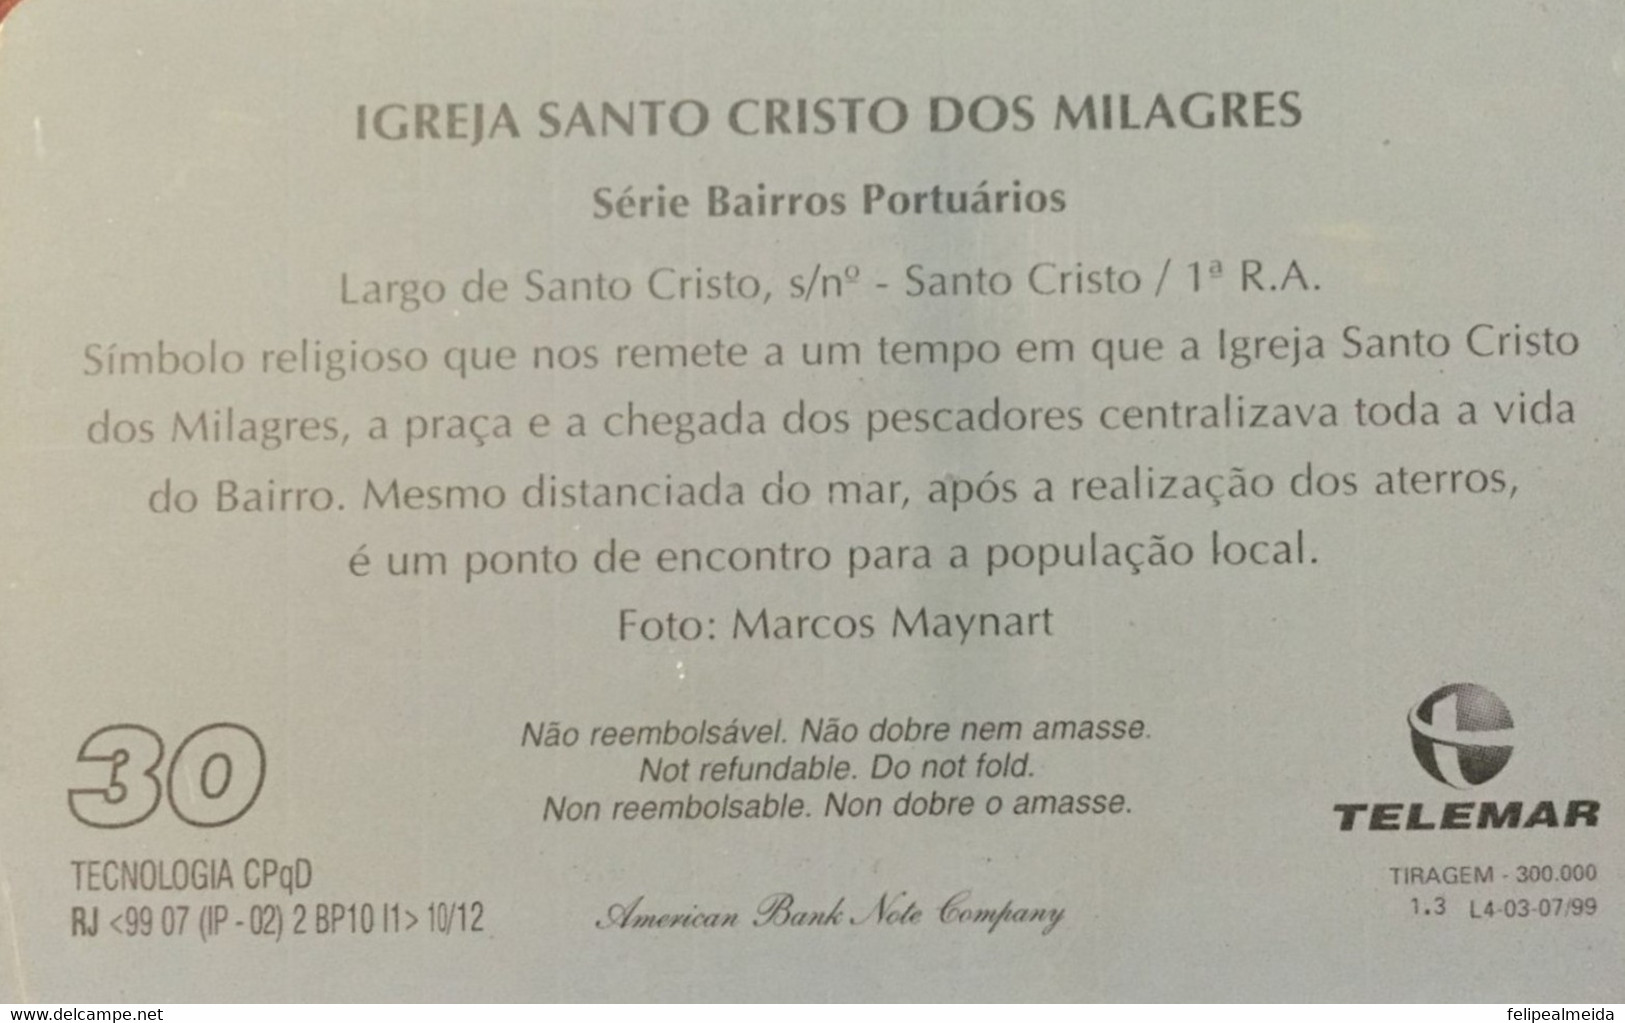 Phone Card Produced By Telemar In 1999 - Bairros Portuários Series - Santo Cristo Dos Milagres Church - Cultura